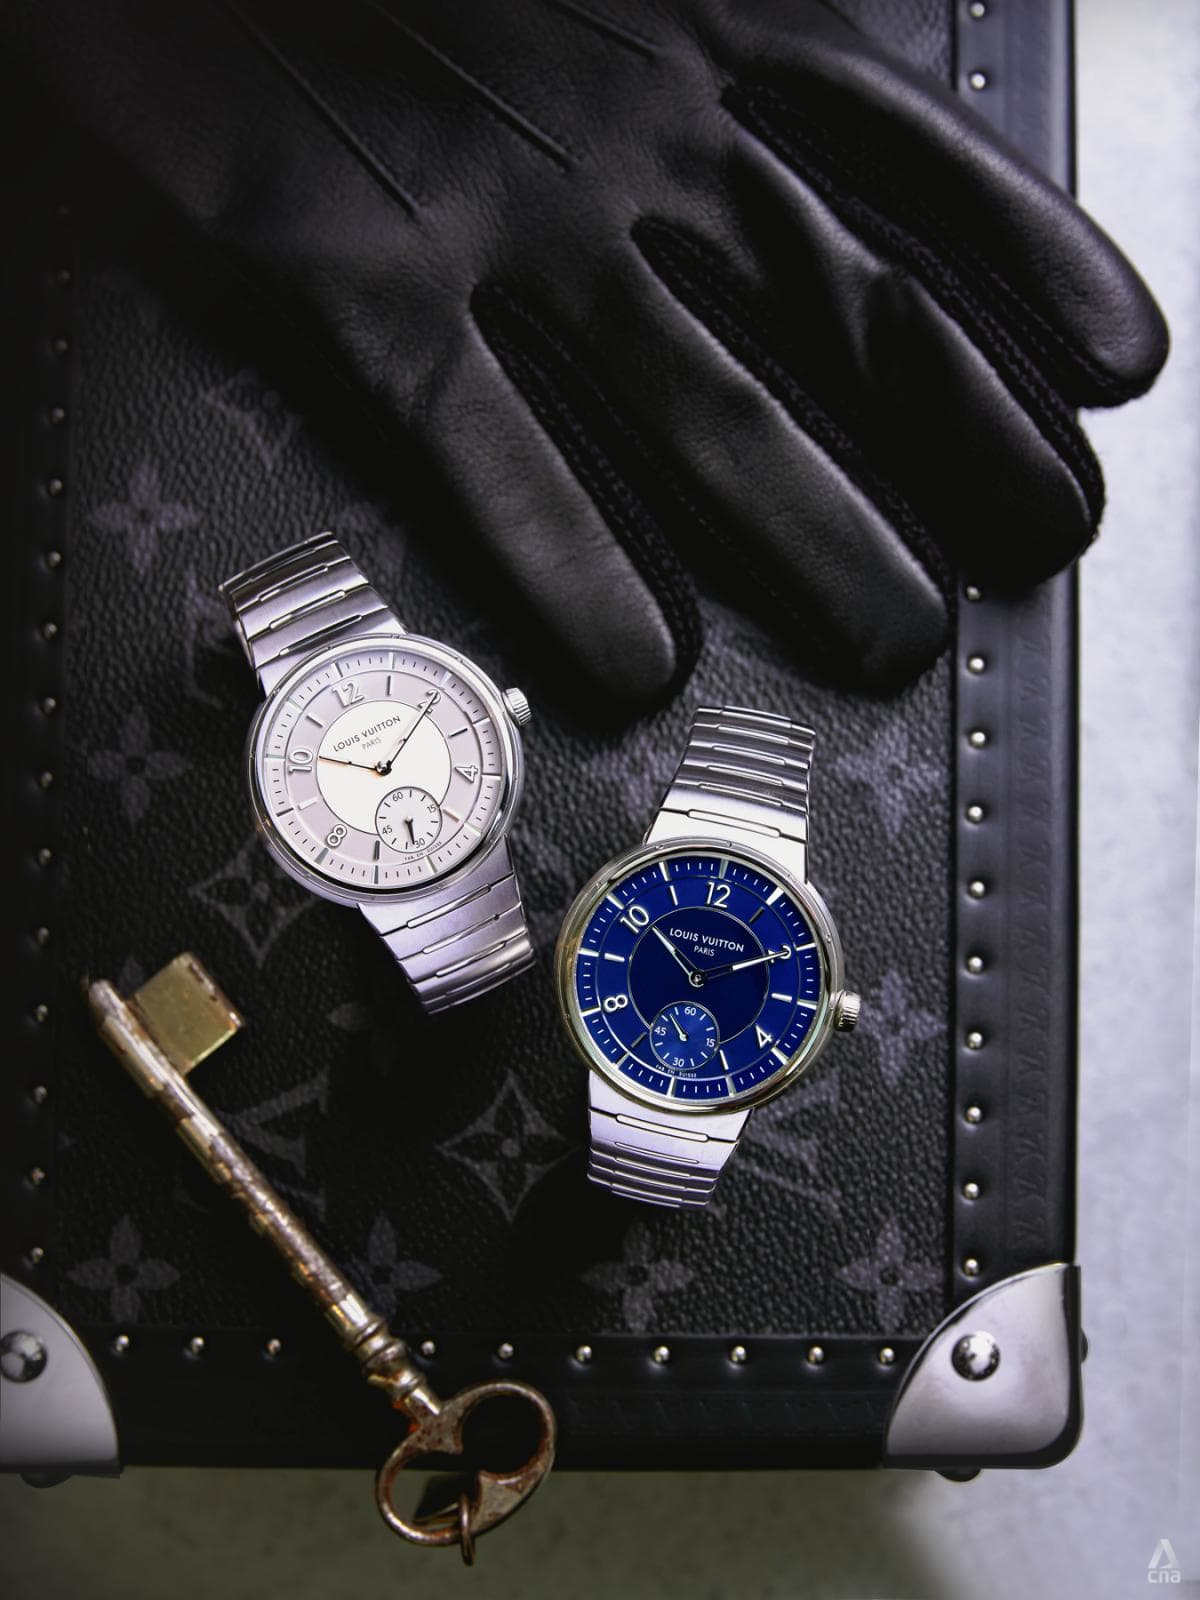 Jean Arnault on 20 Years of Watchmaking at Louis Vuitton 